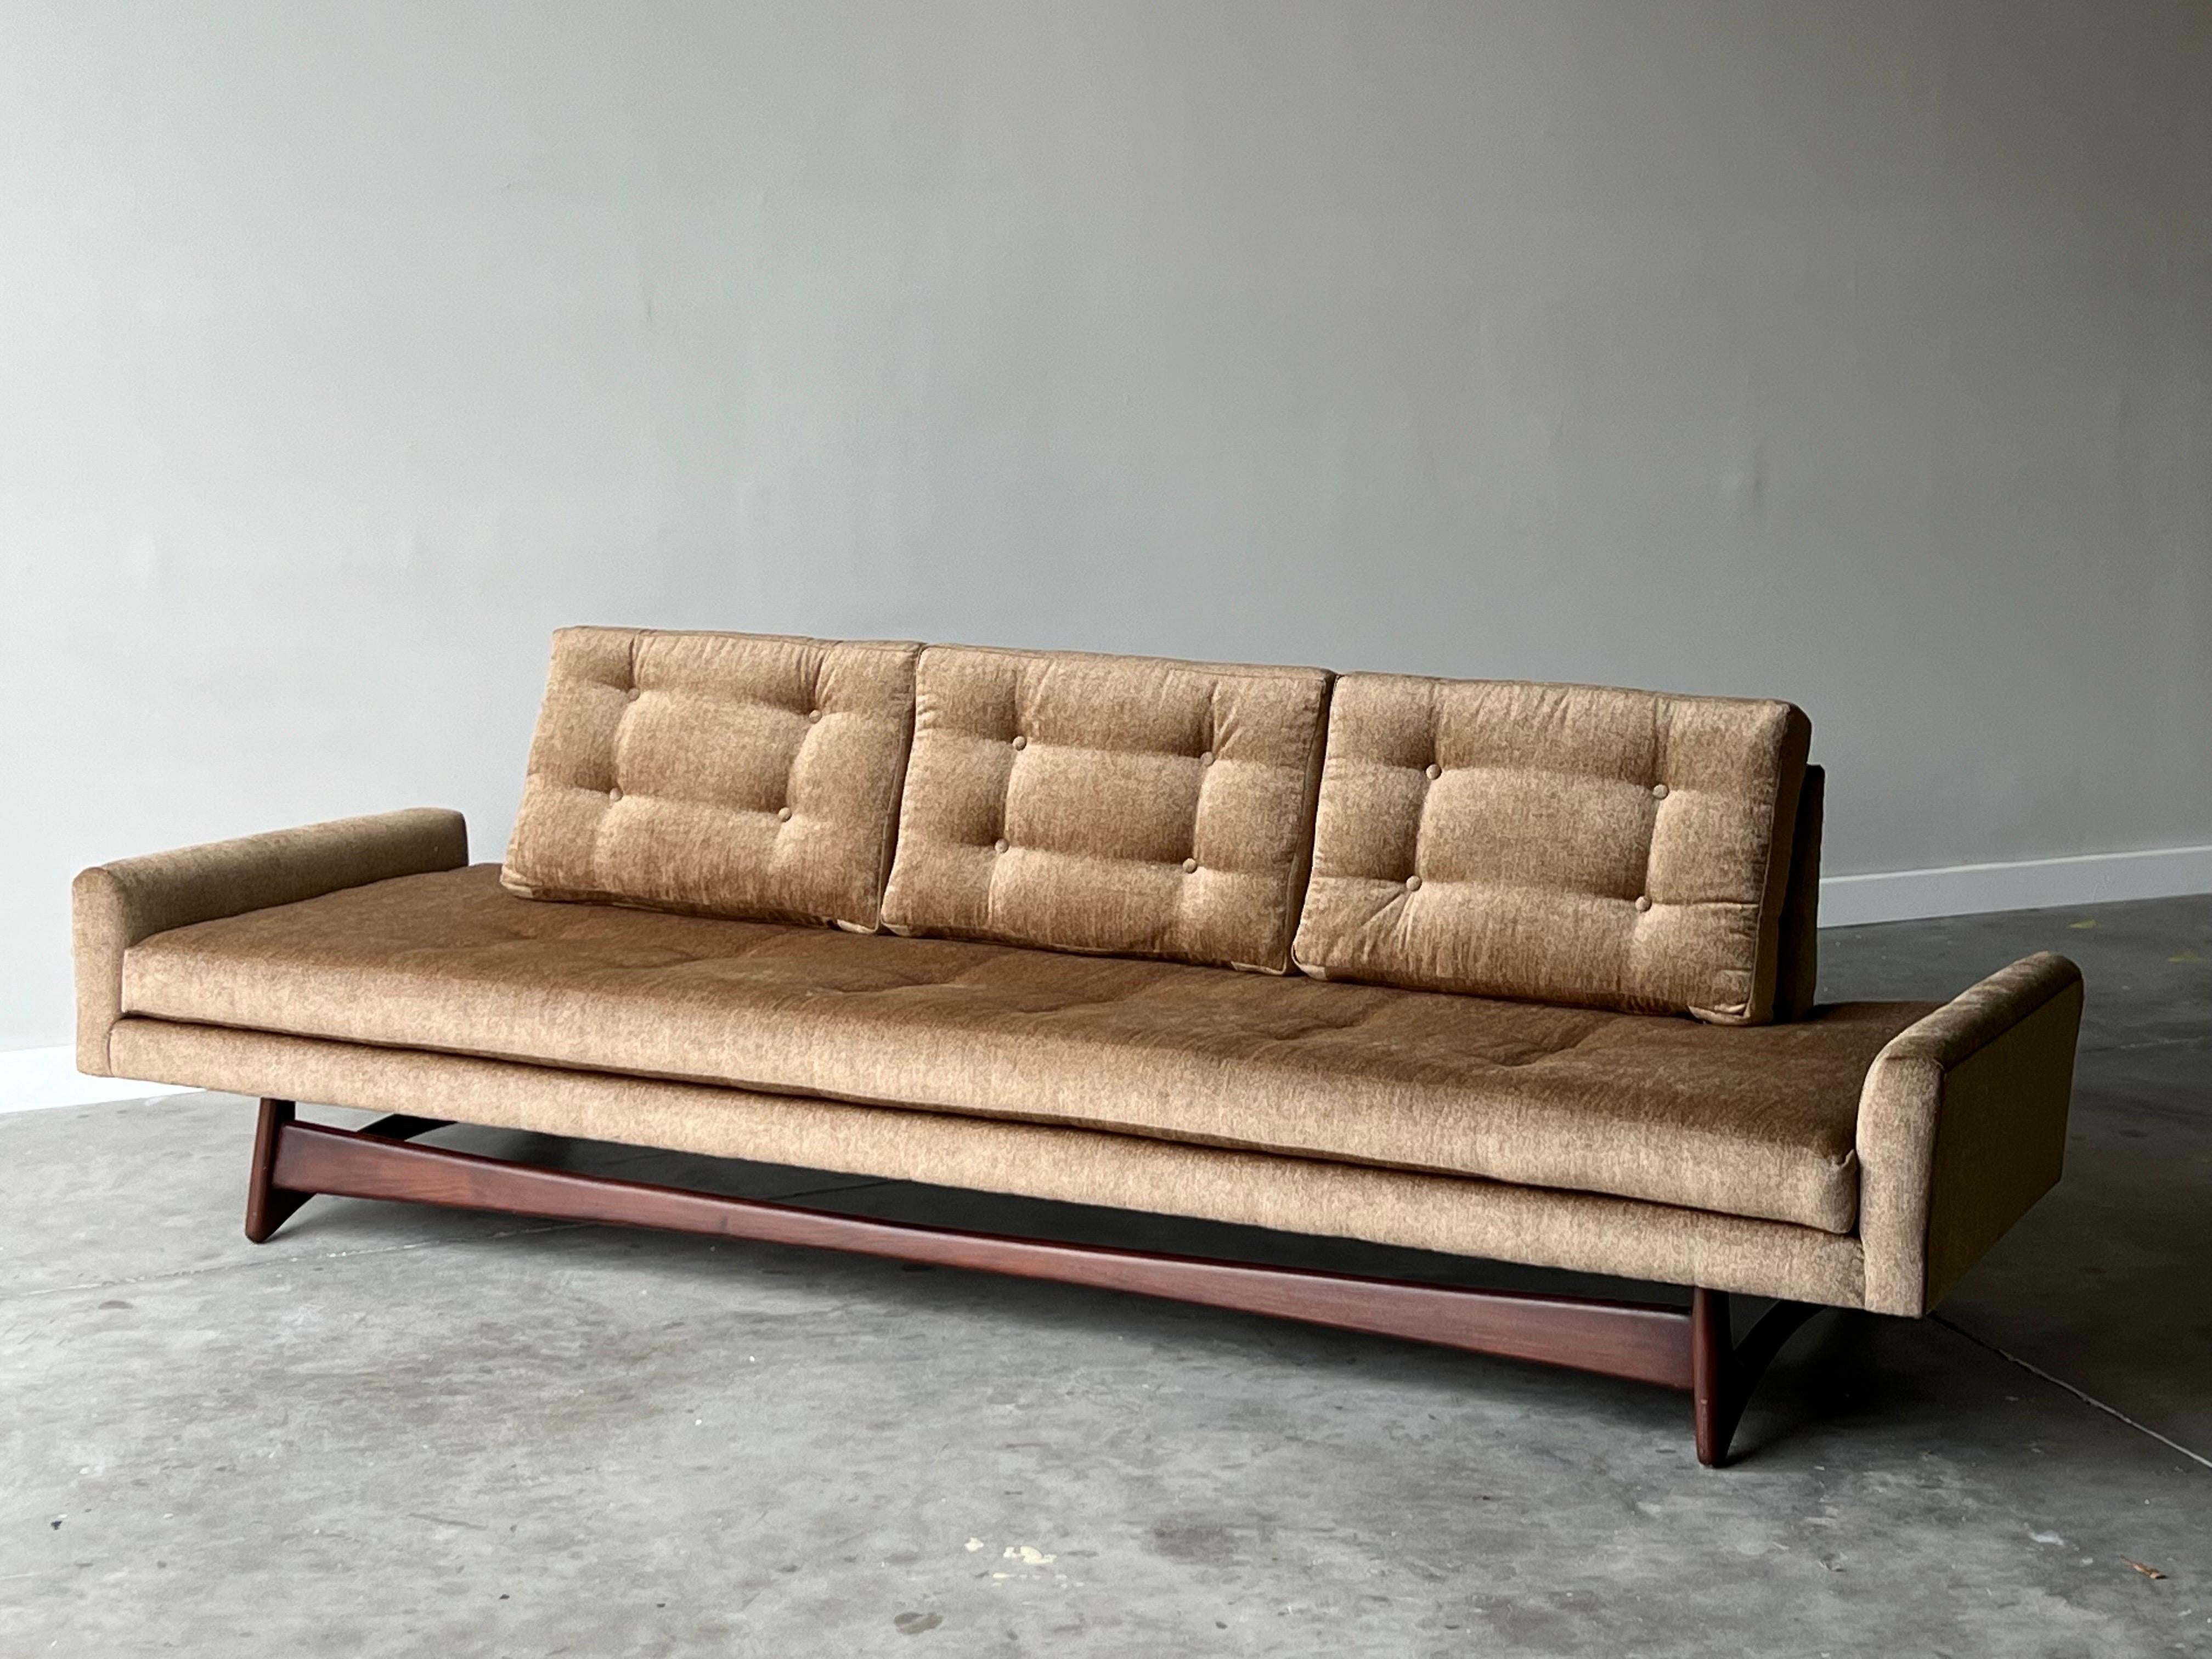 Fabric Adrian Pearsall for Craft Associates Model 2408-S Sofa